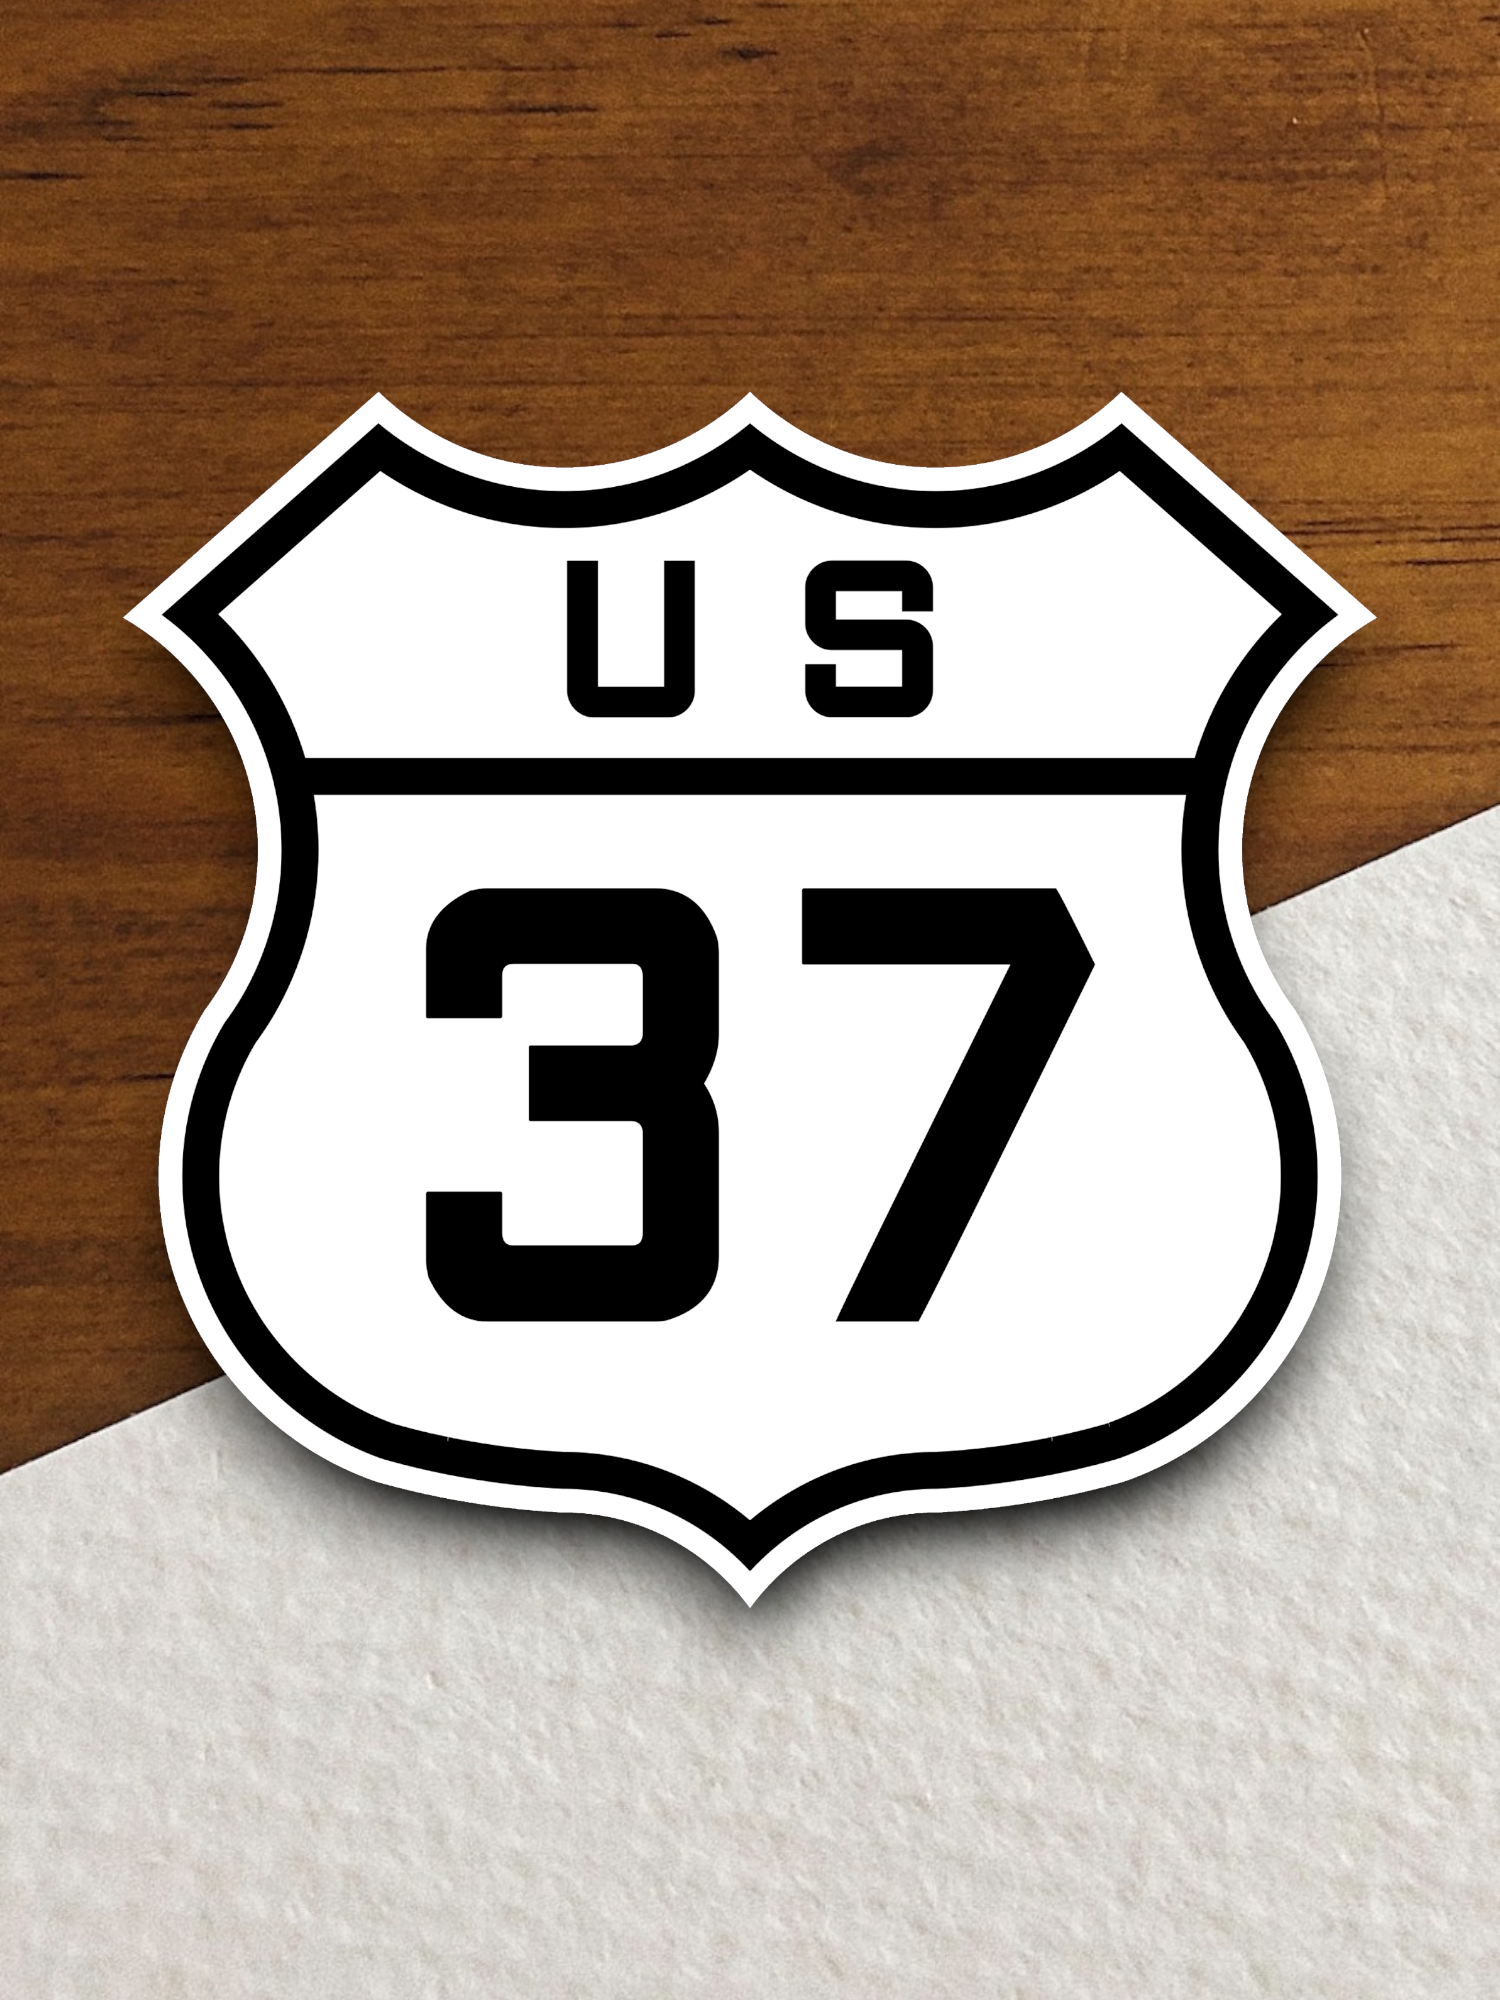 U.S. Route 37 Road Sign Sticker